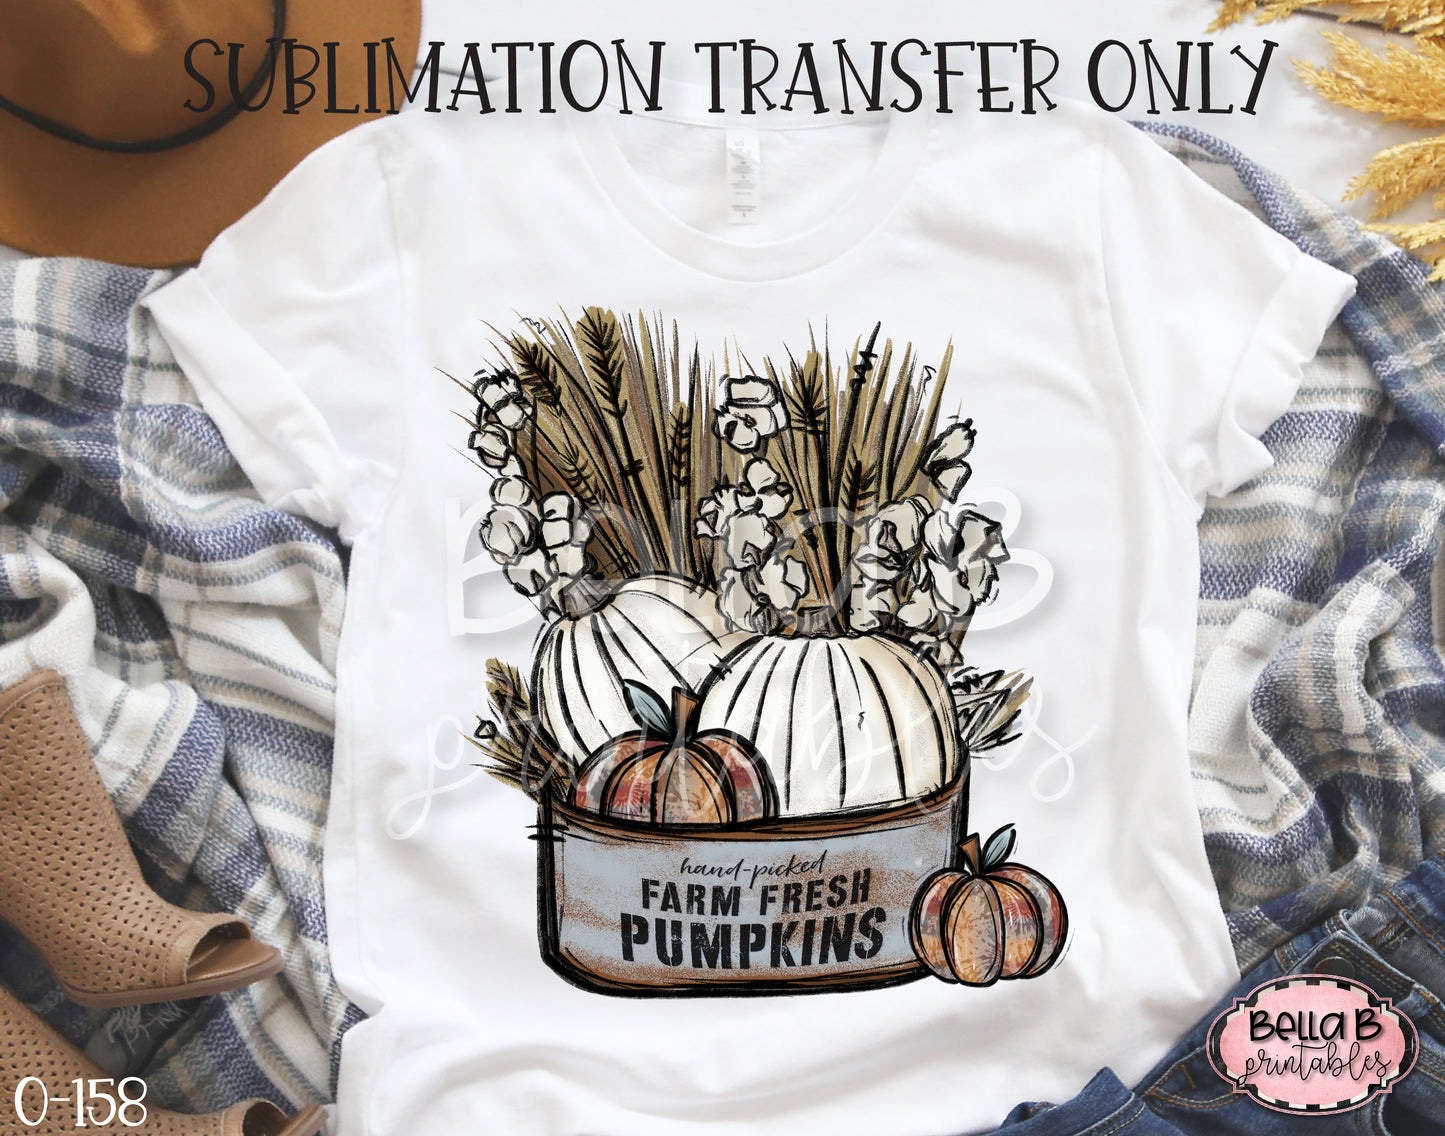 Farm Fresh Pumpkins Sublimation Transfer, Ready To Press